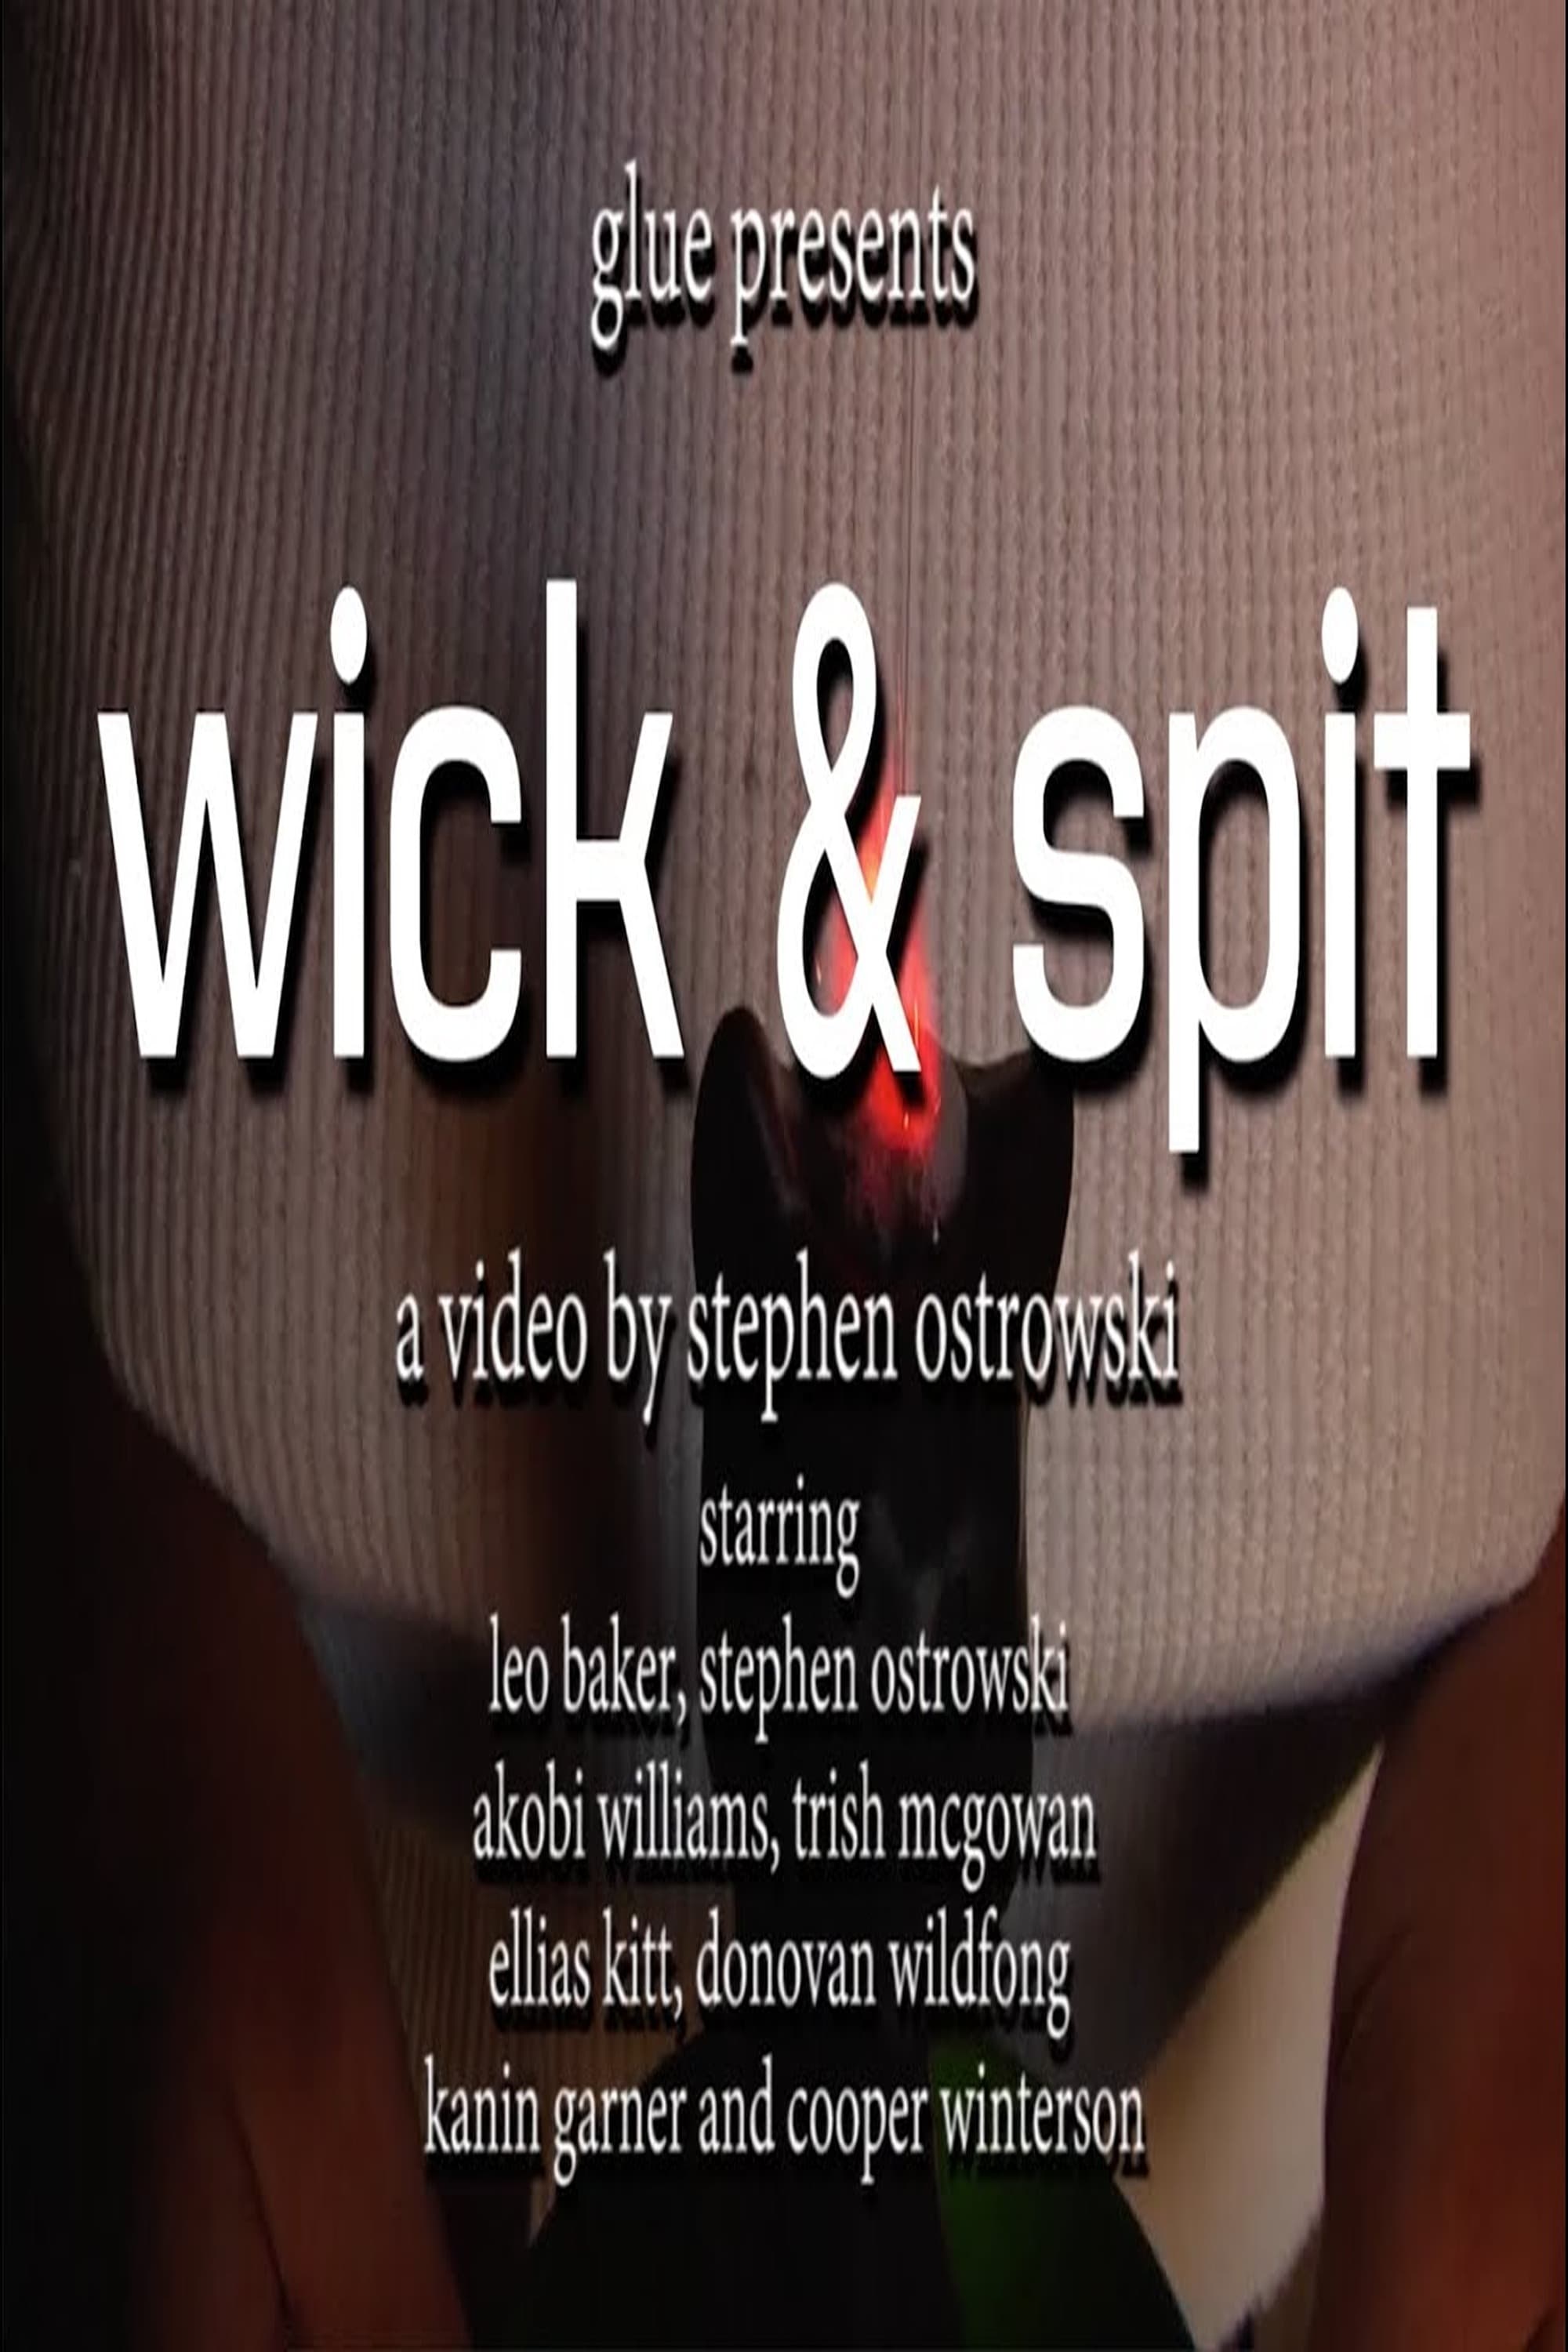 wick & spit